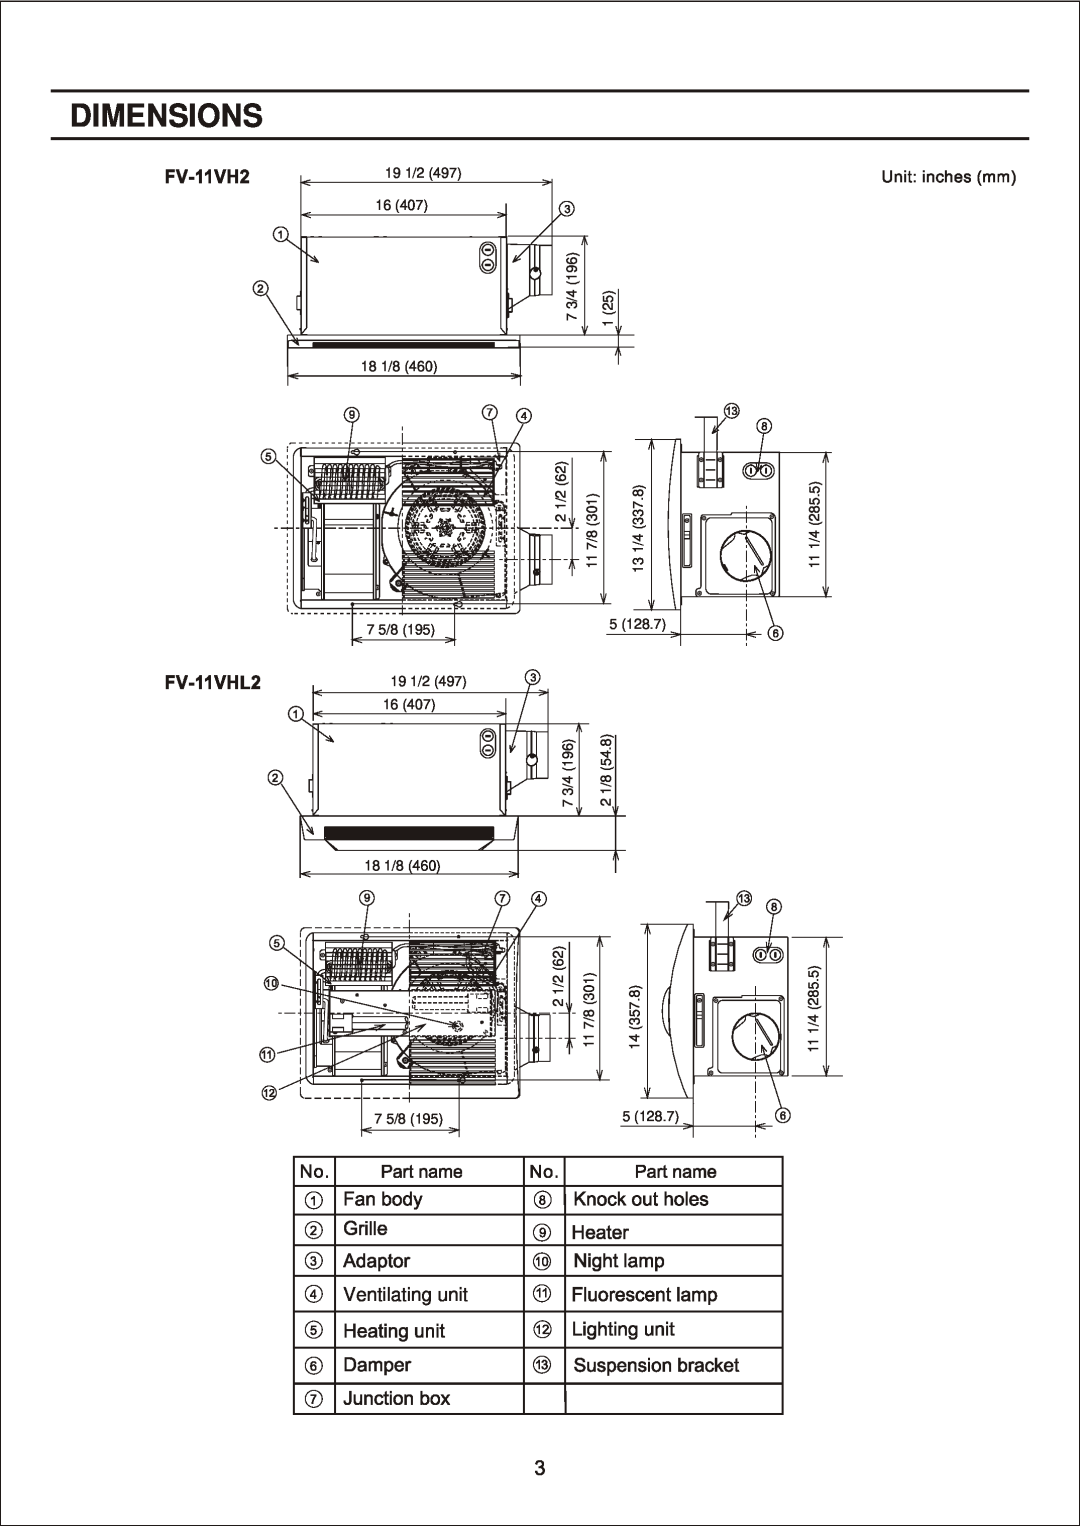 Panasonic FV-11VHL2, FV-11VH2 manual Dimensions, Ventilating unit 